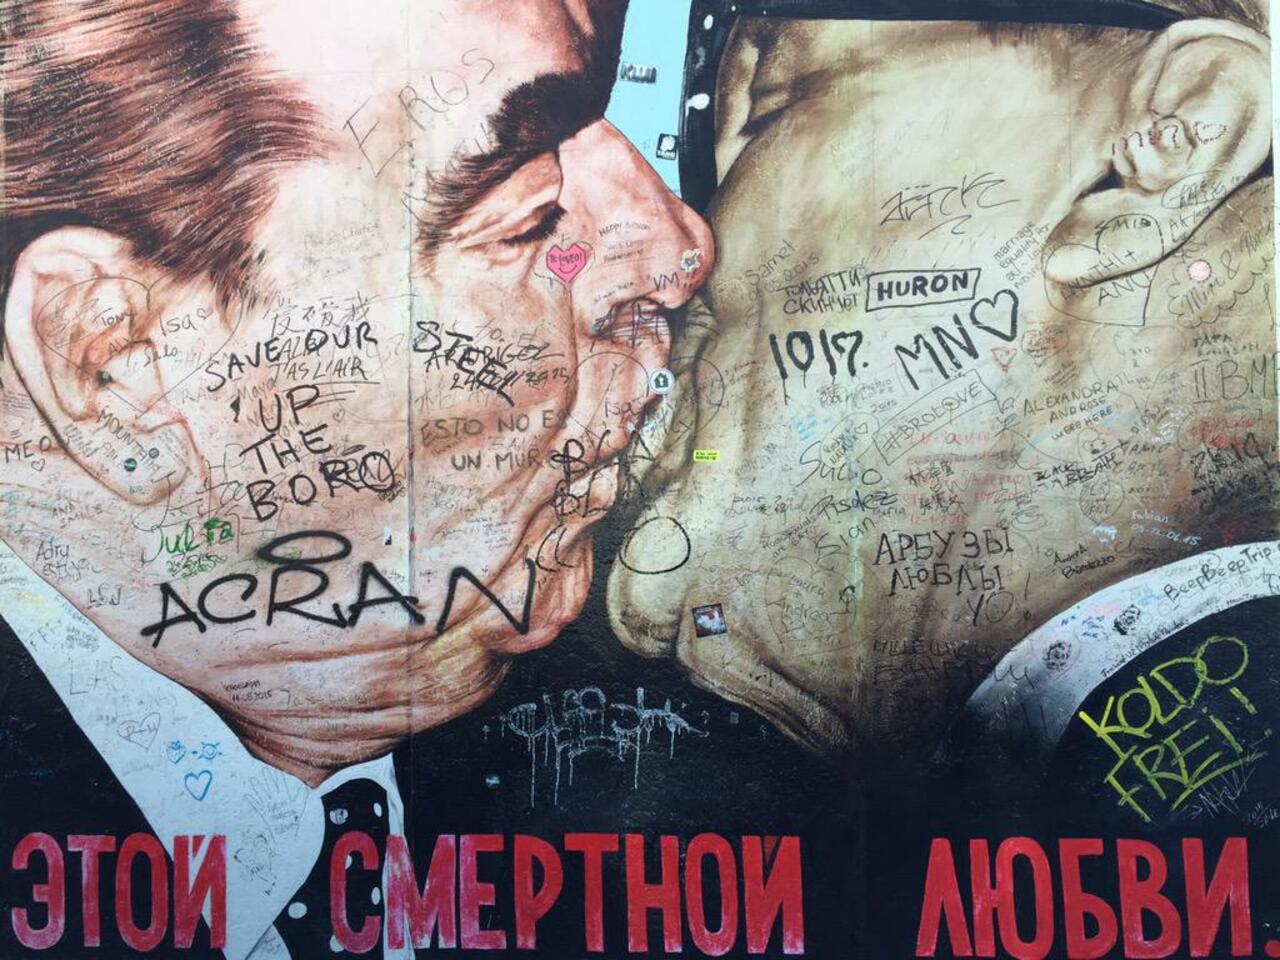 RT @MissQuesta: more beautiful #streetart from
#BerlinWall #EastSideGallery
#graffiti #Berlin http://t.co/jDoBZH7vh7